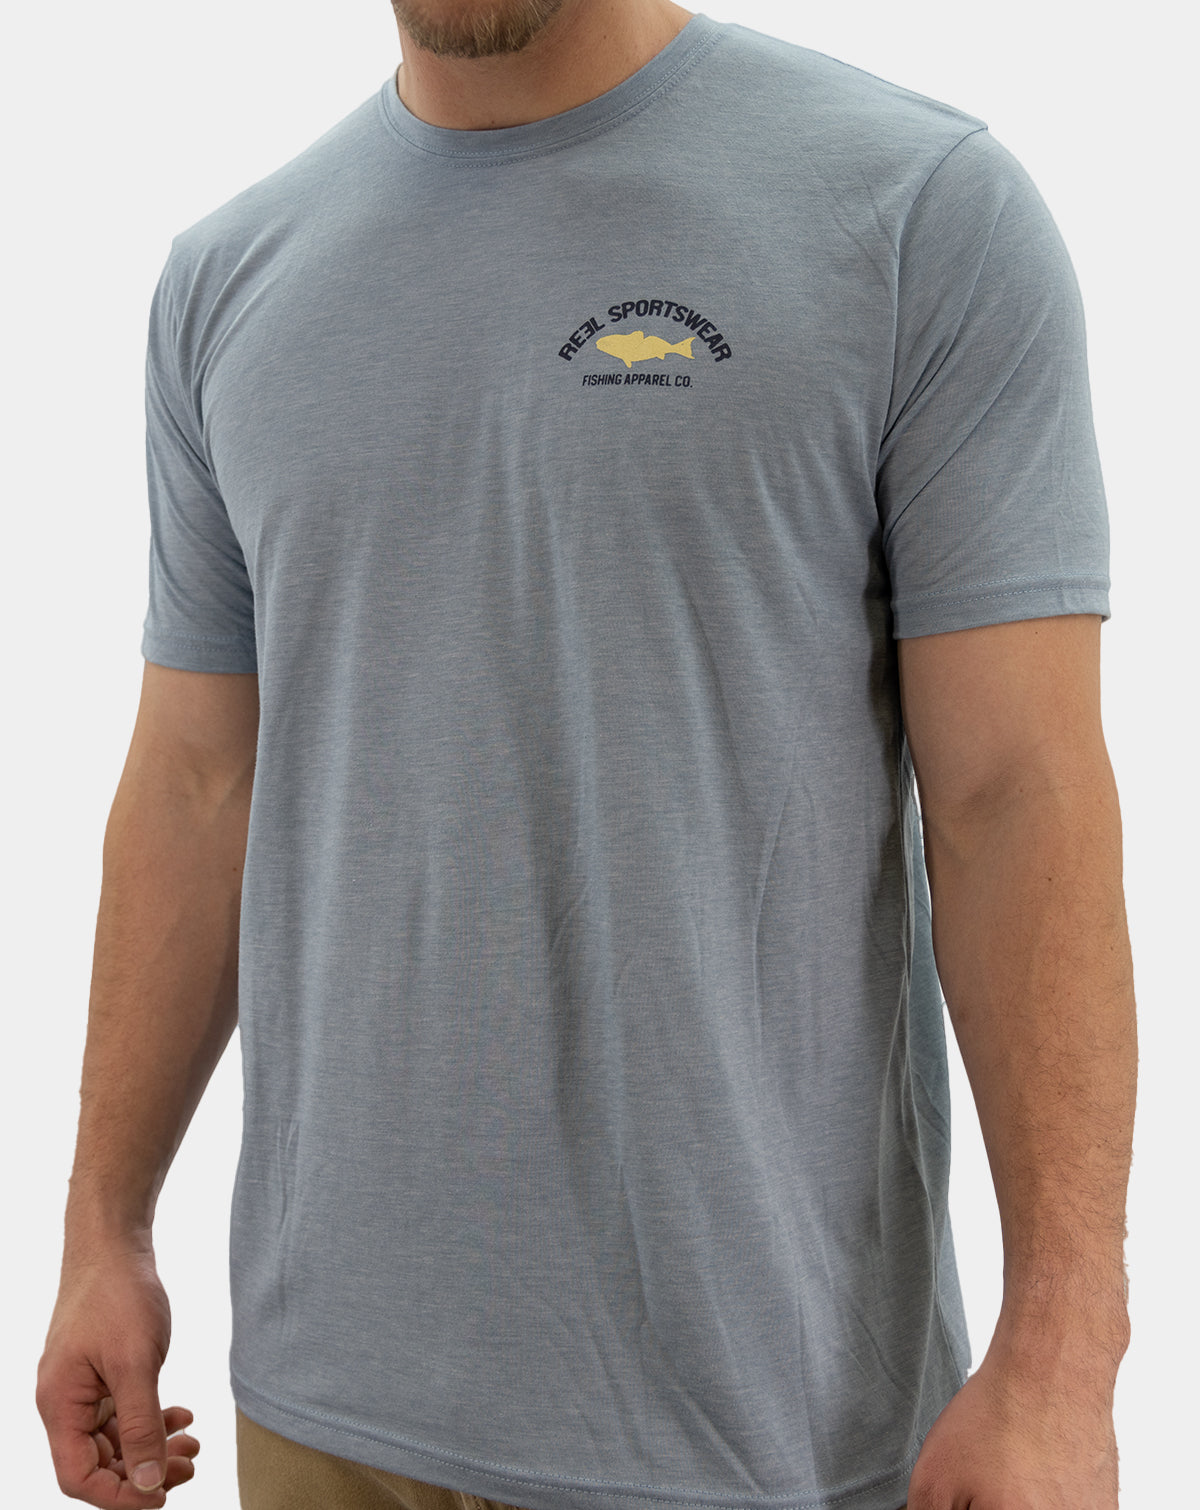 The Simple Life - men&#39;s Fishing tee shirt - reel sportswear